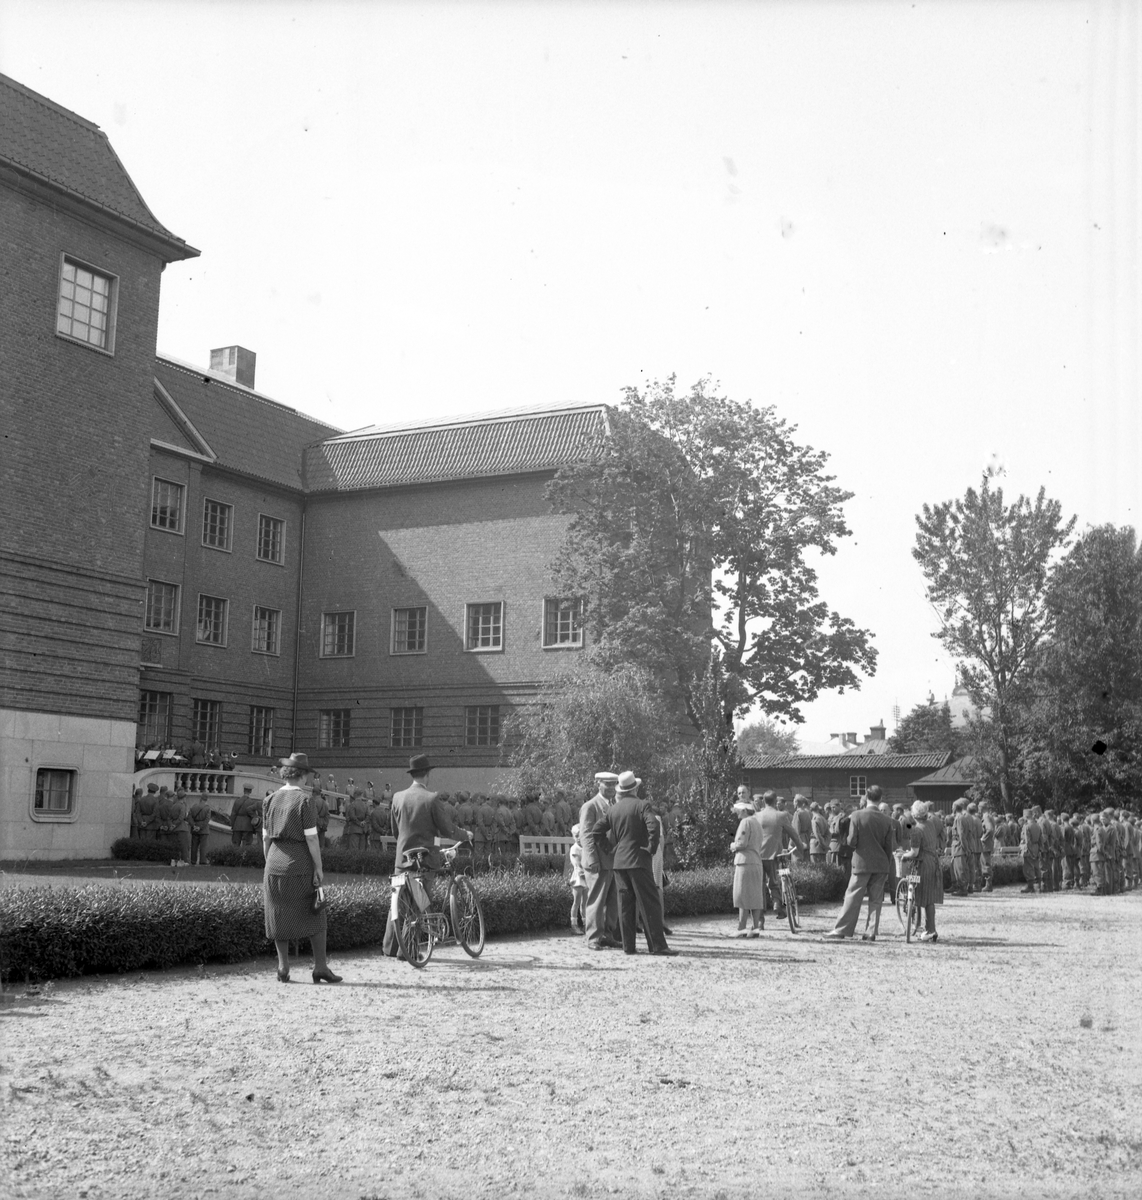 Juni 1944. Stabens korum. Muséets gårdsplan

